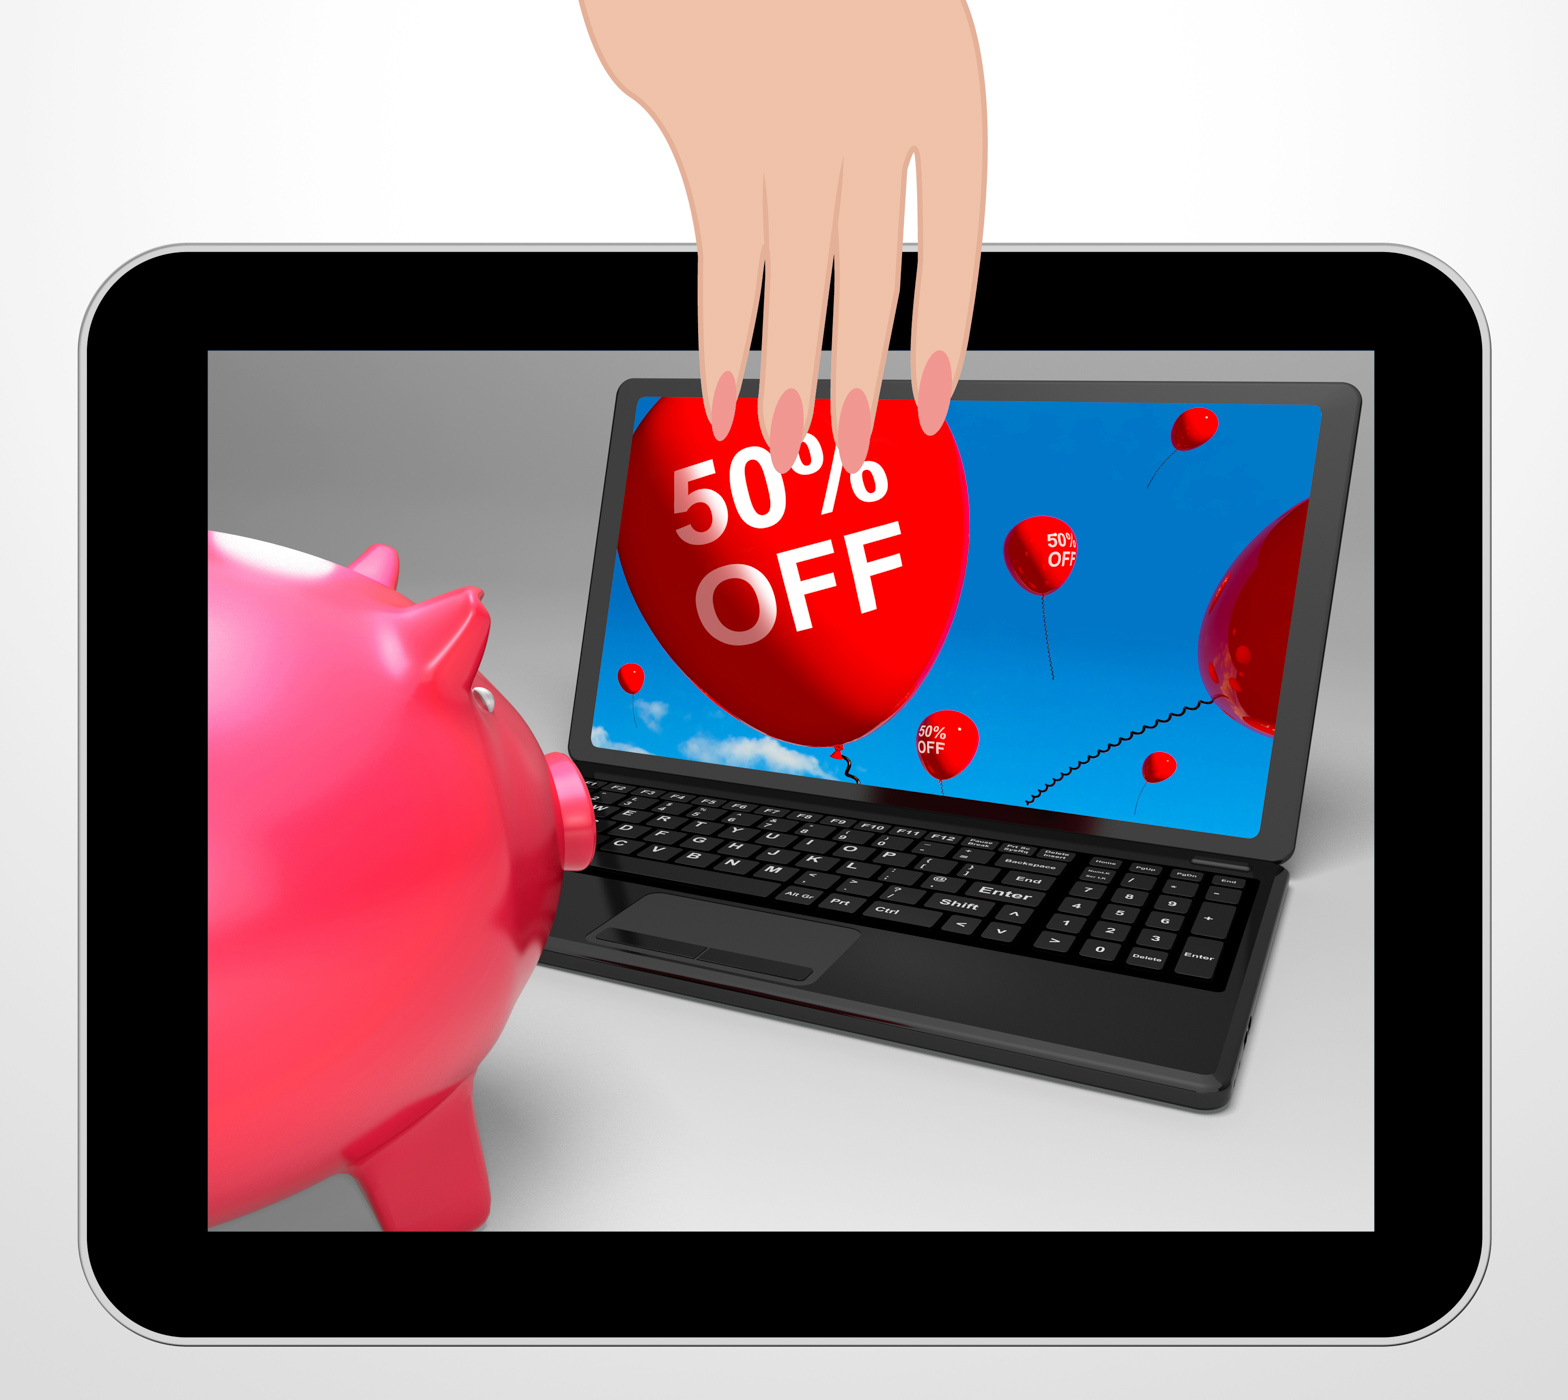 Fifty percent off laptop displays 50 half-price savings photo